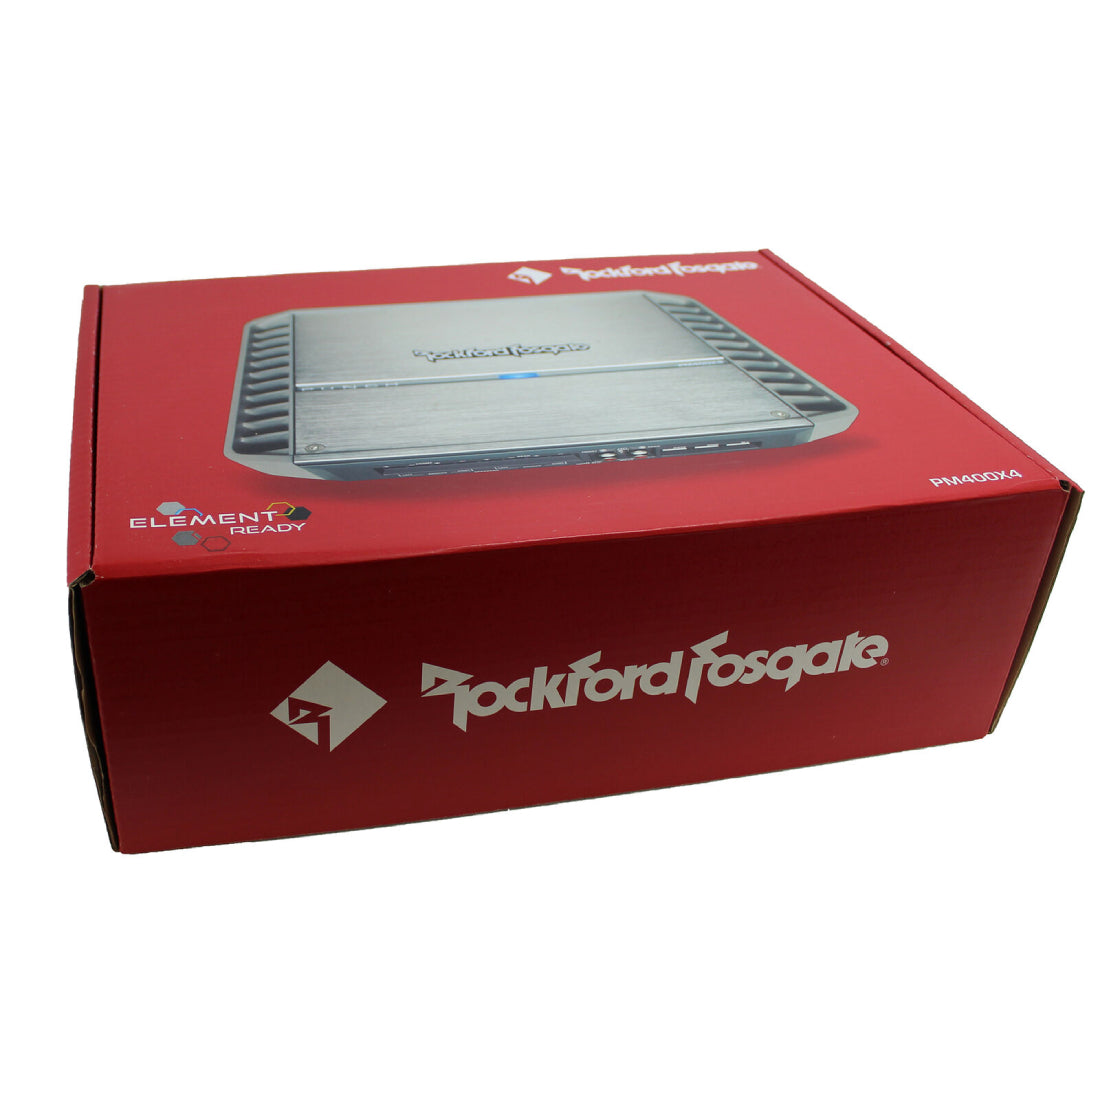 Rockford Fosgate PM400X4 400W Max 4-Channel Class-A/B Marine Audio Amplifier